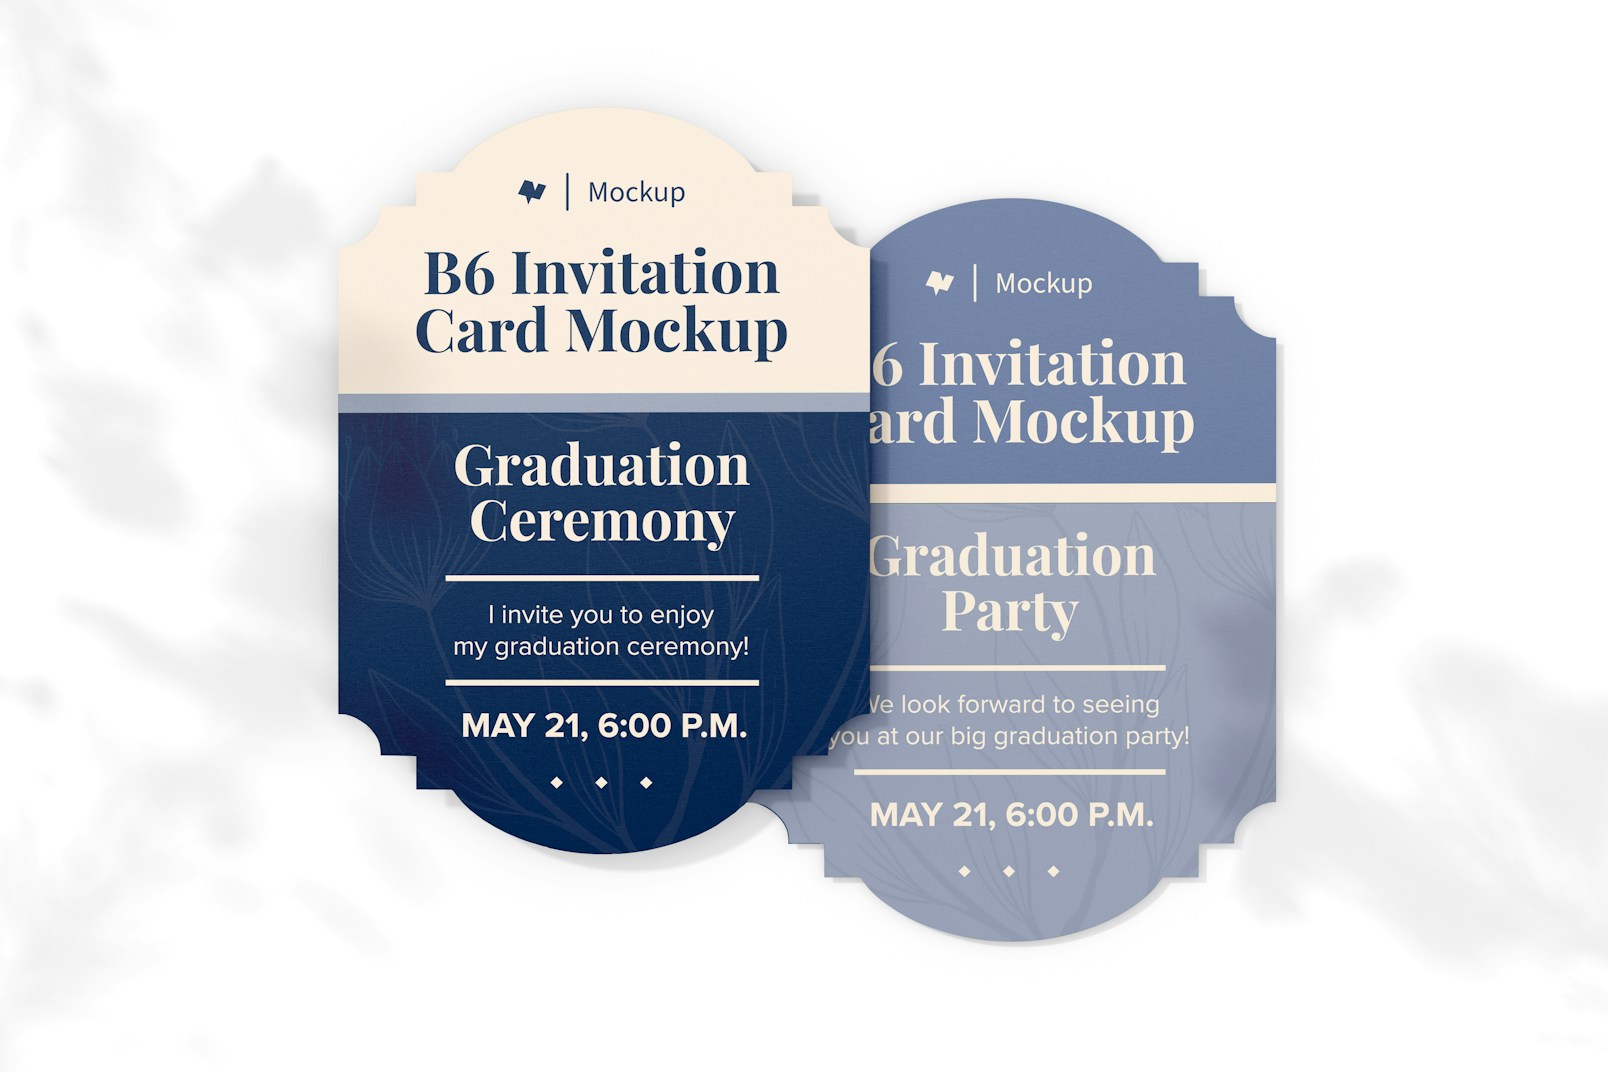 B6 Invitation Card Mockup, Perspective